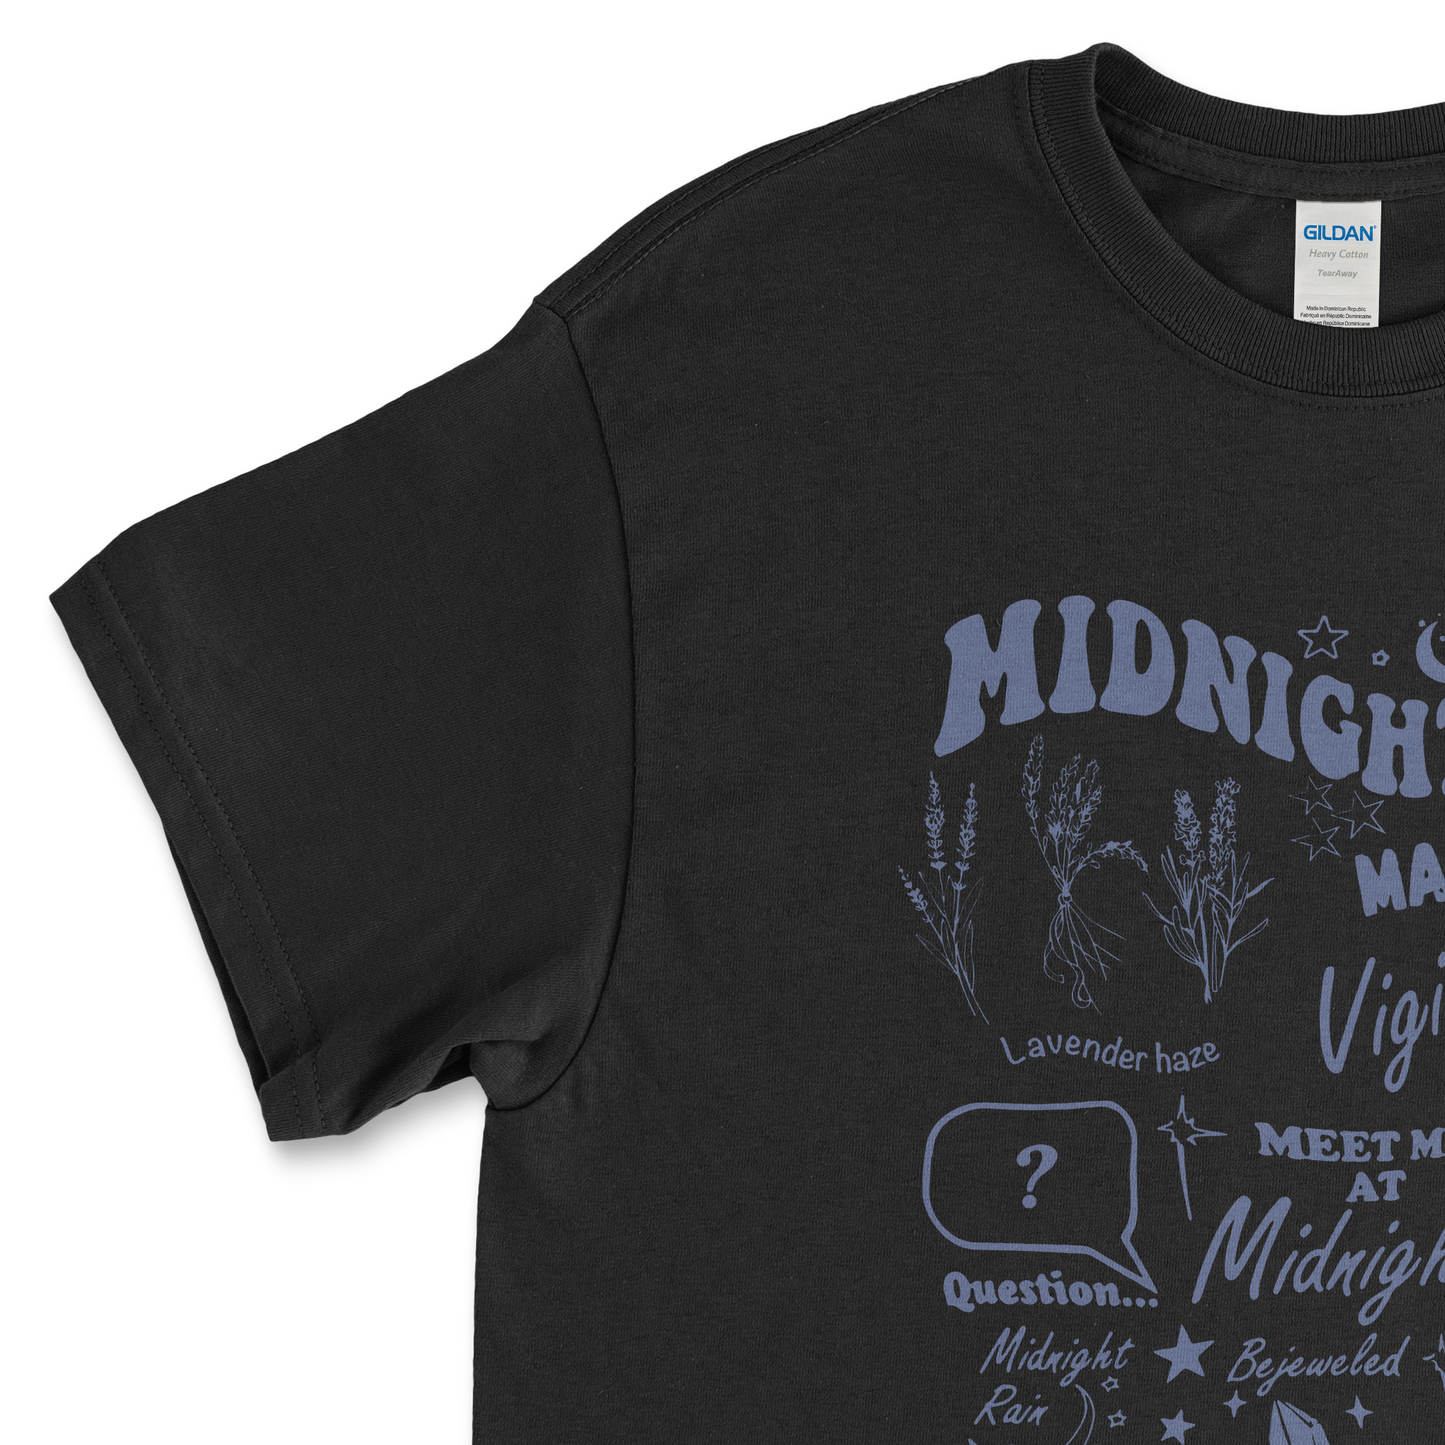 Midnights Lyrics Taylor Swift T-Shirt